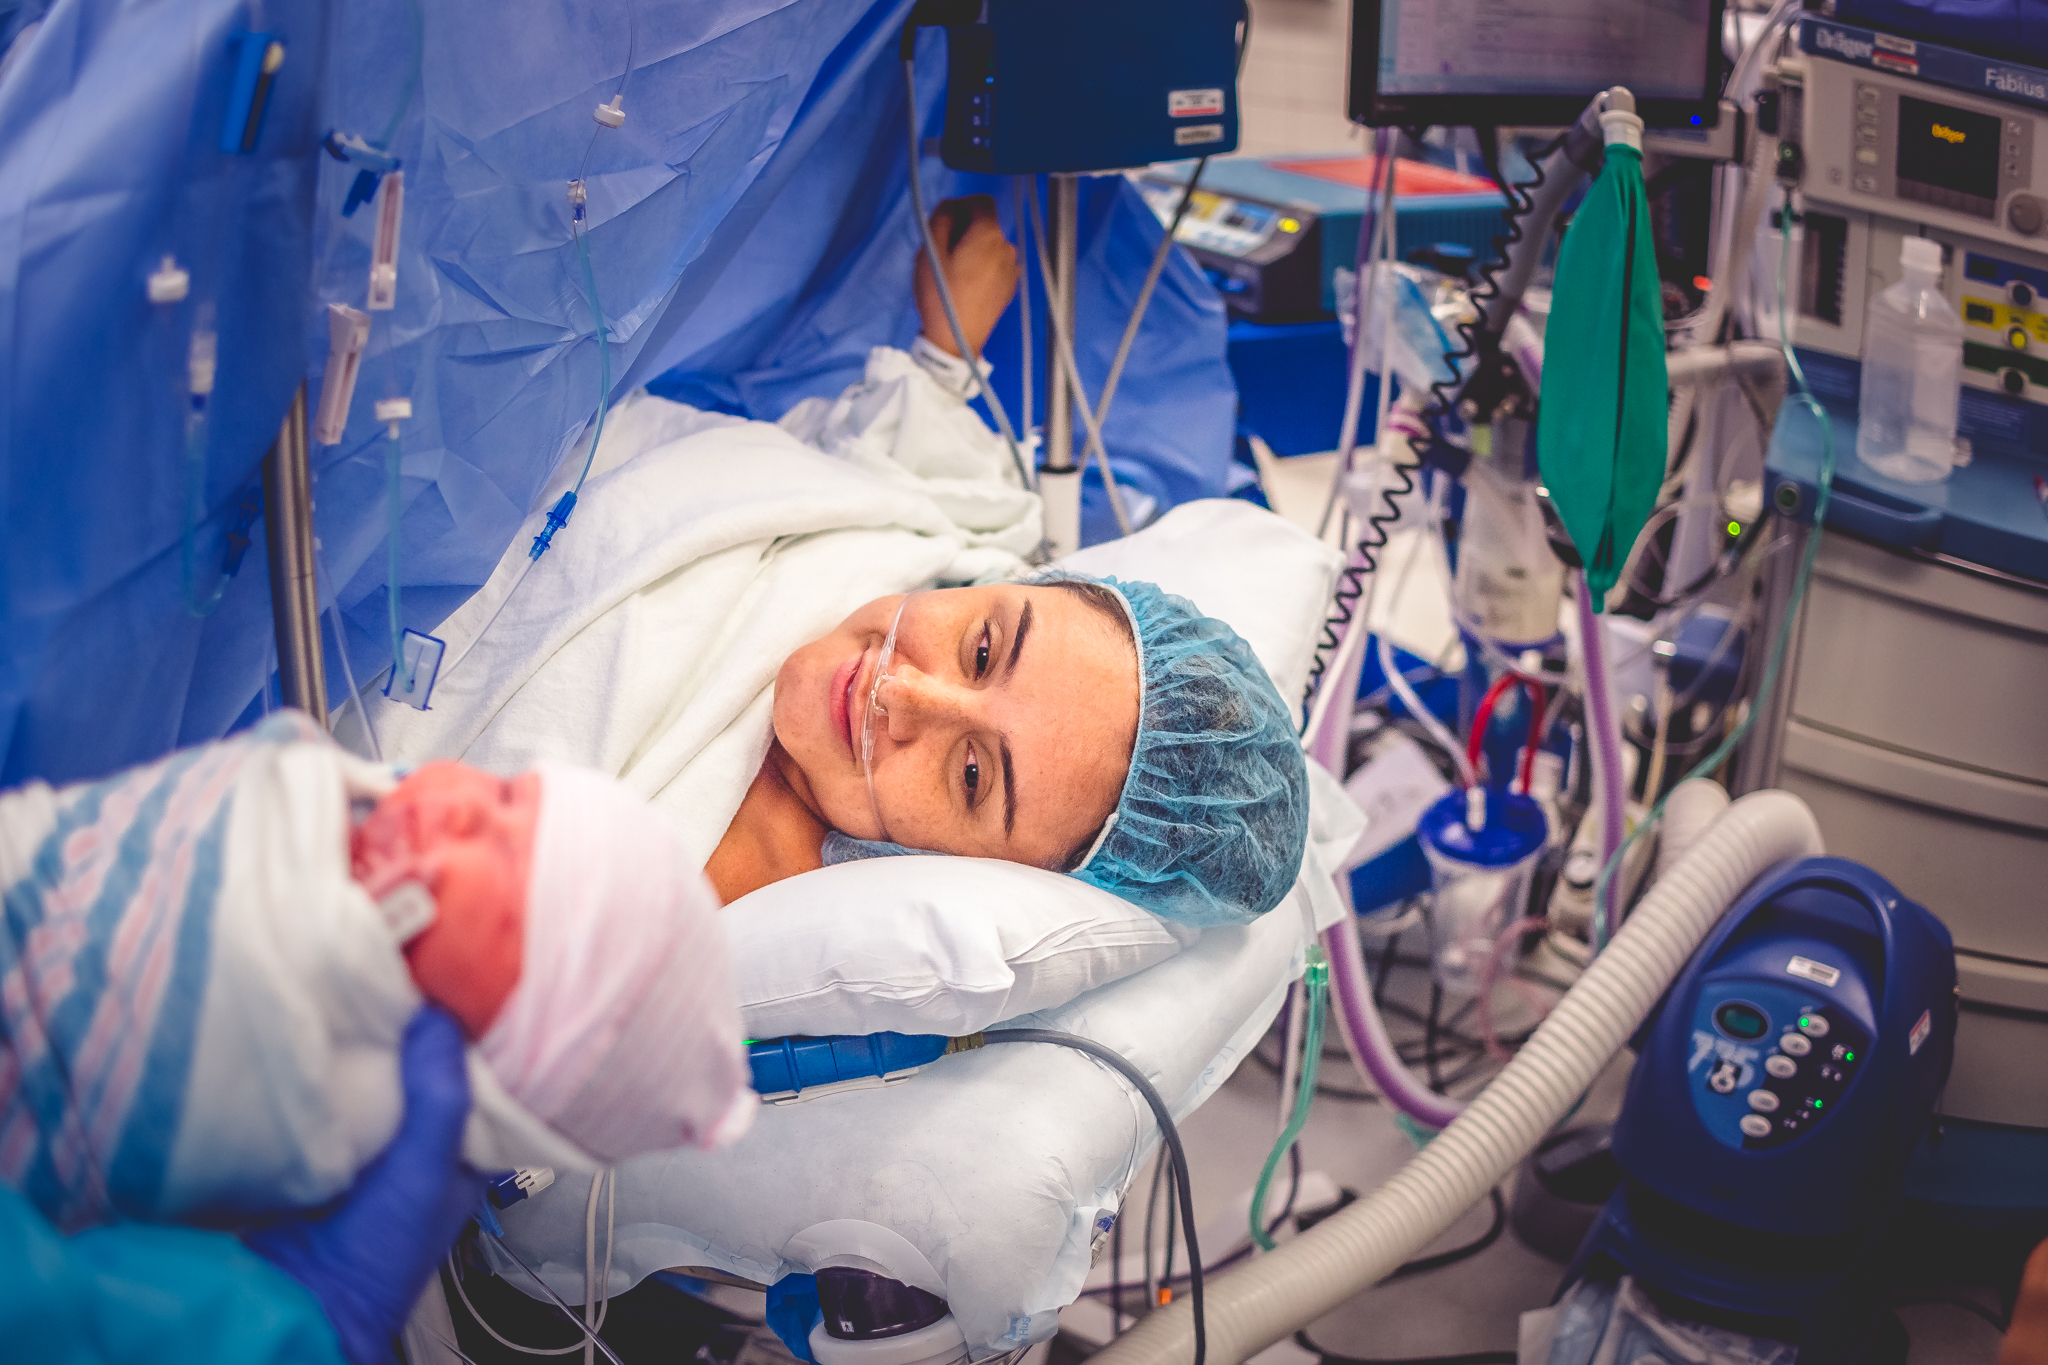 gentle cesarean birth photography and birth videography birth videographer boca raton florida-1.jpg